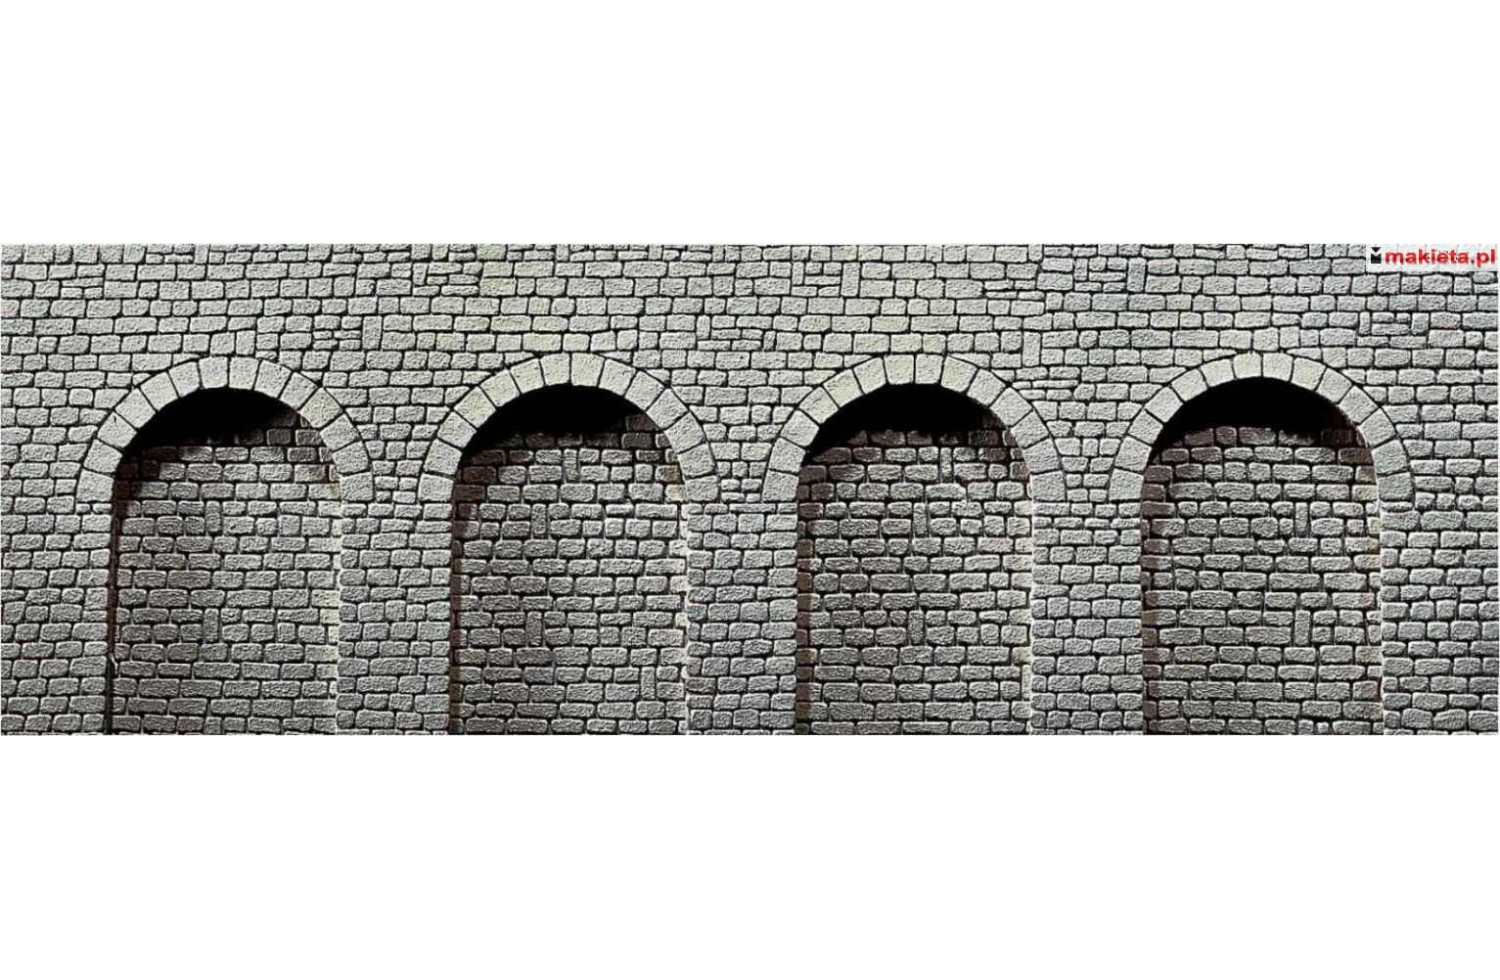 Faller 170838. Mur oporowy z arkadami, 370 x 125 x 12 mm, skala H0